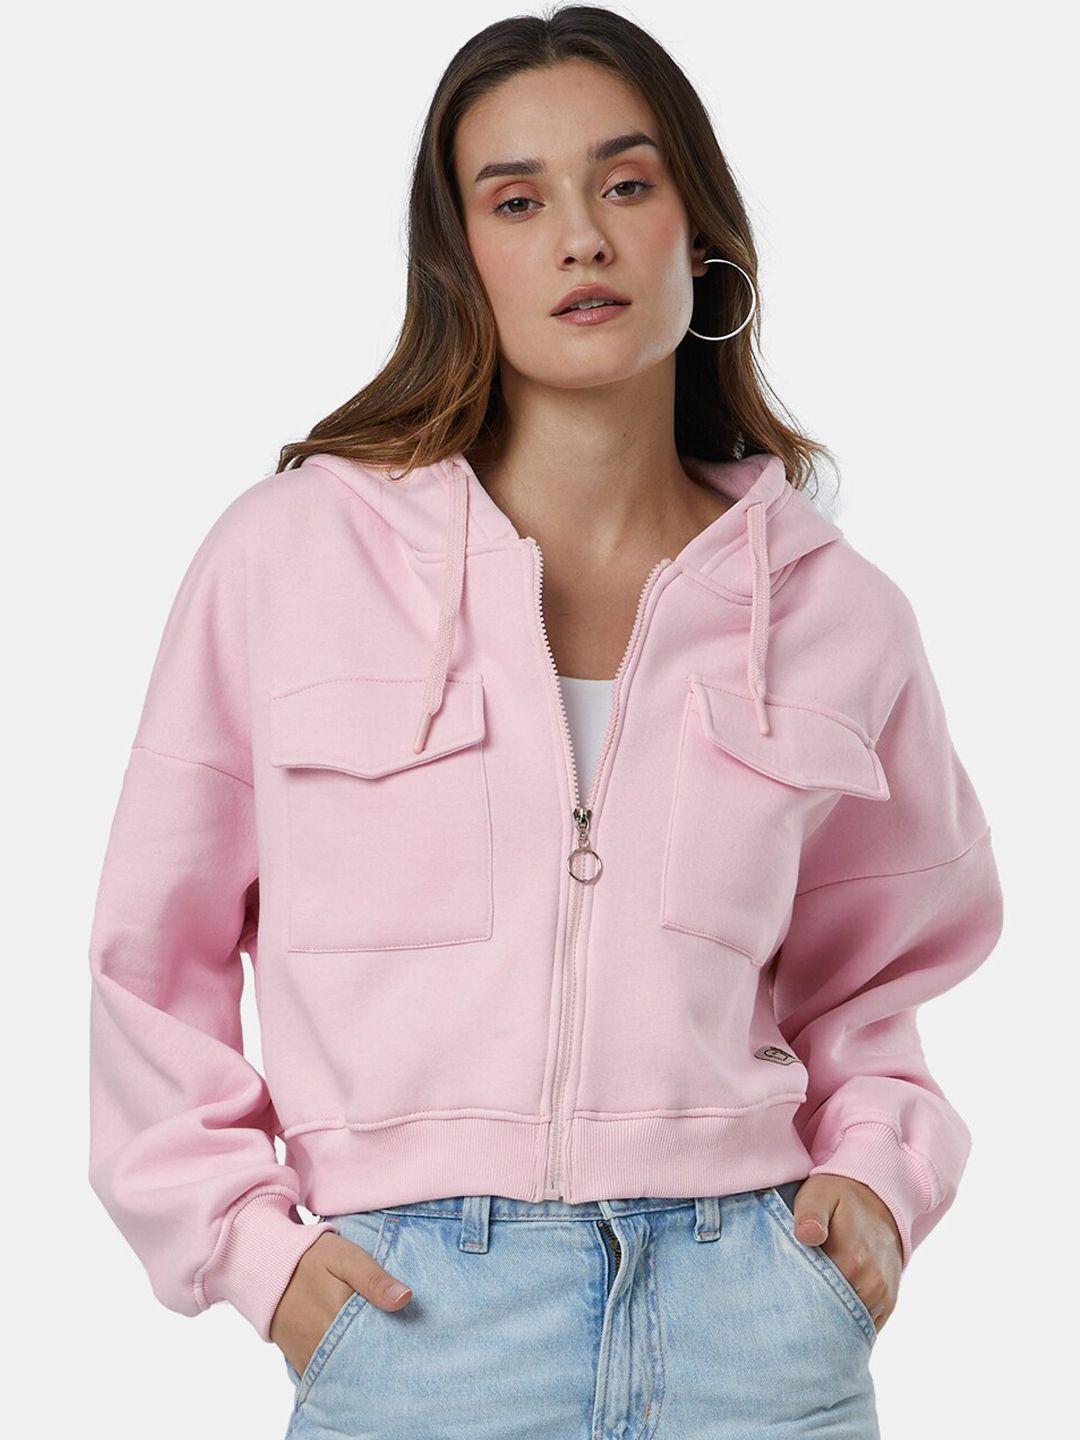 the-souled-store-women-pink-crop-denim-jacket